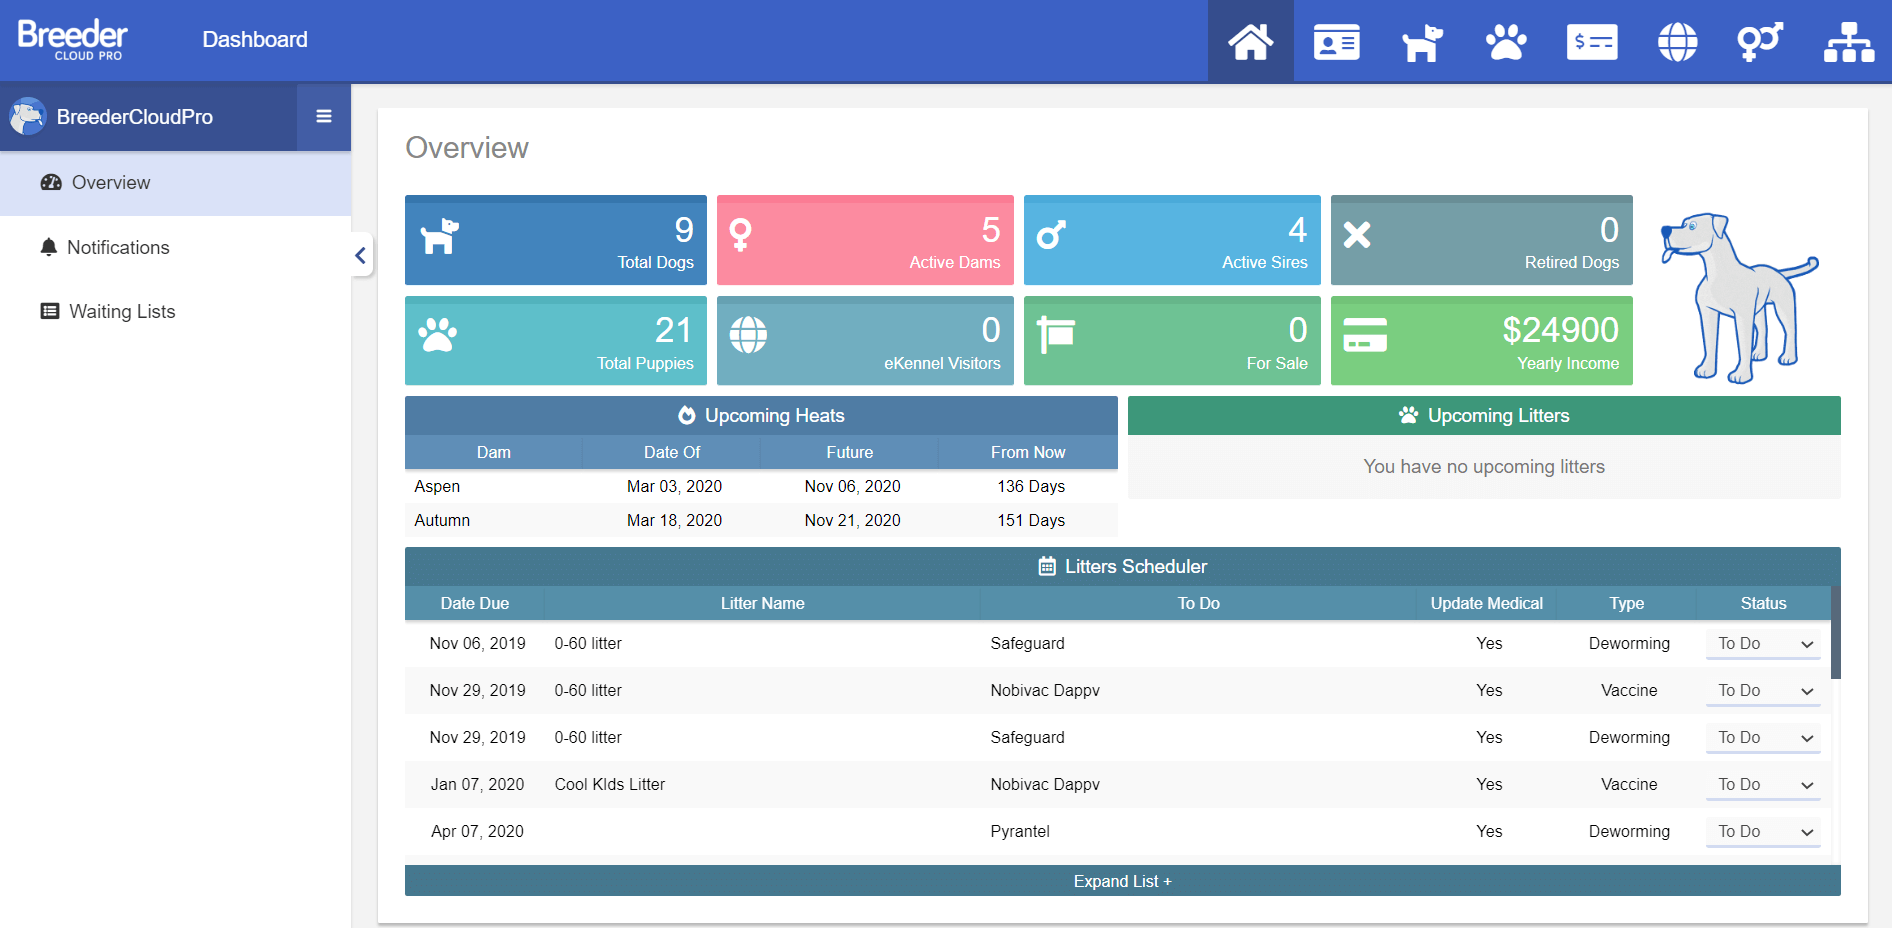 Breeder Cloud Pro dashboard